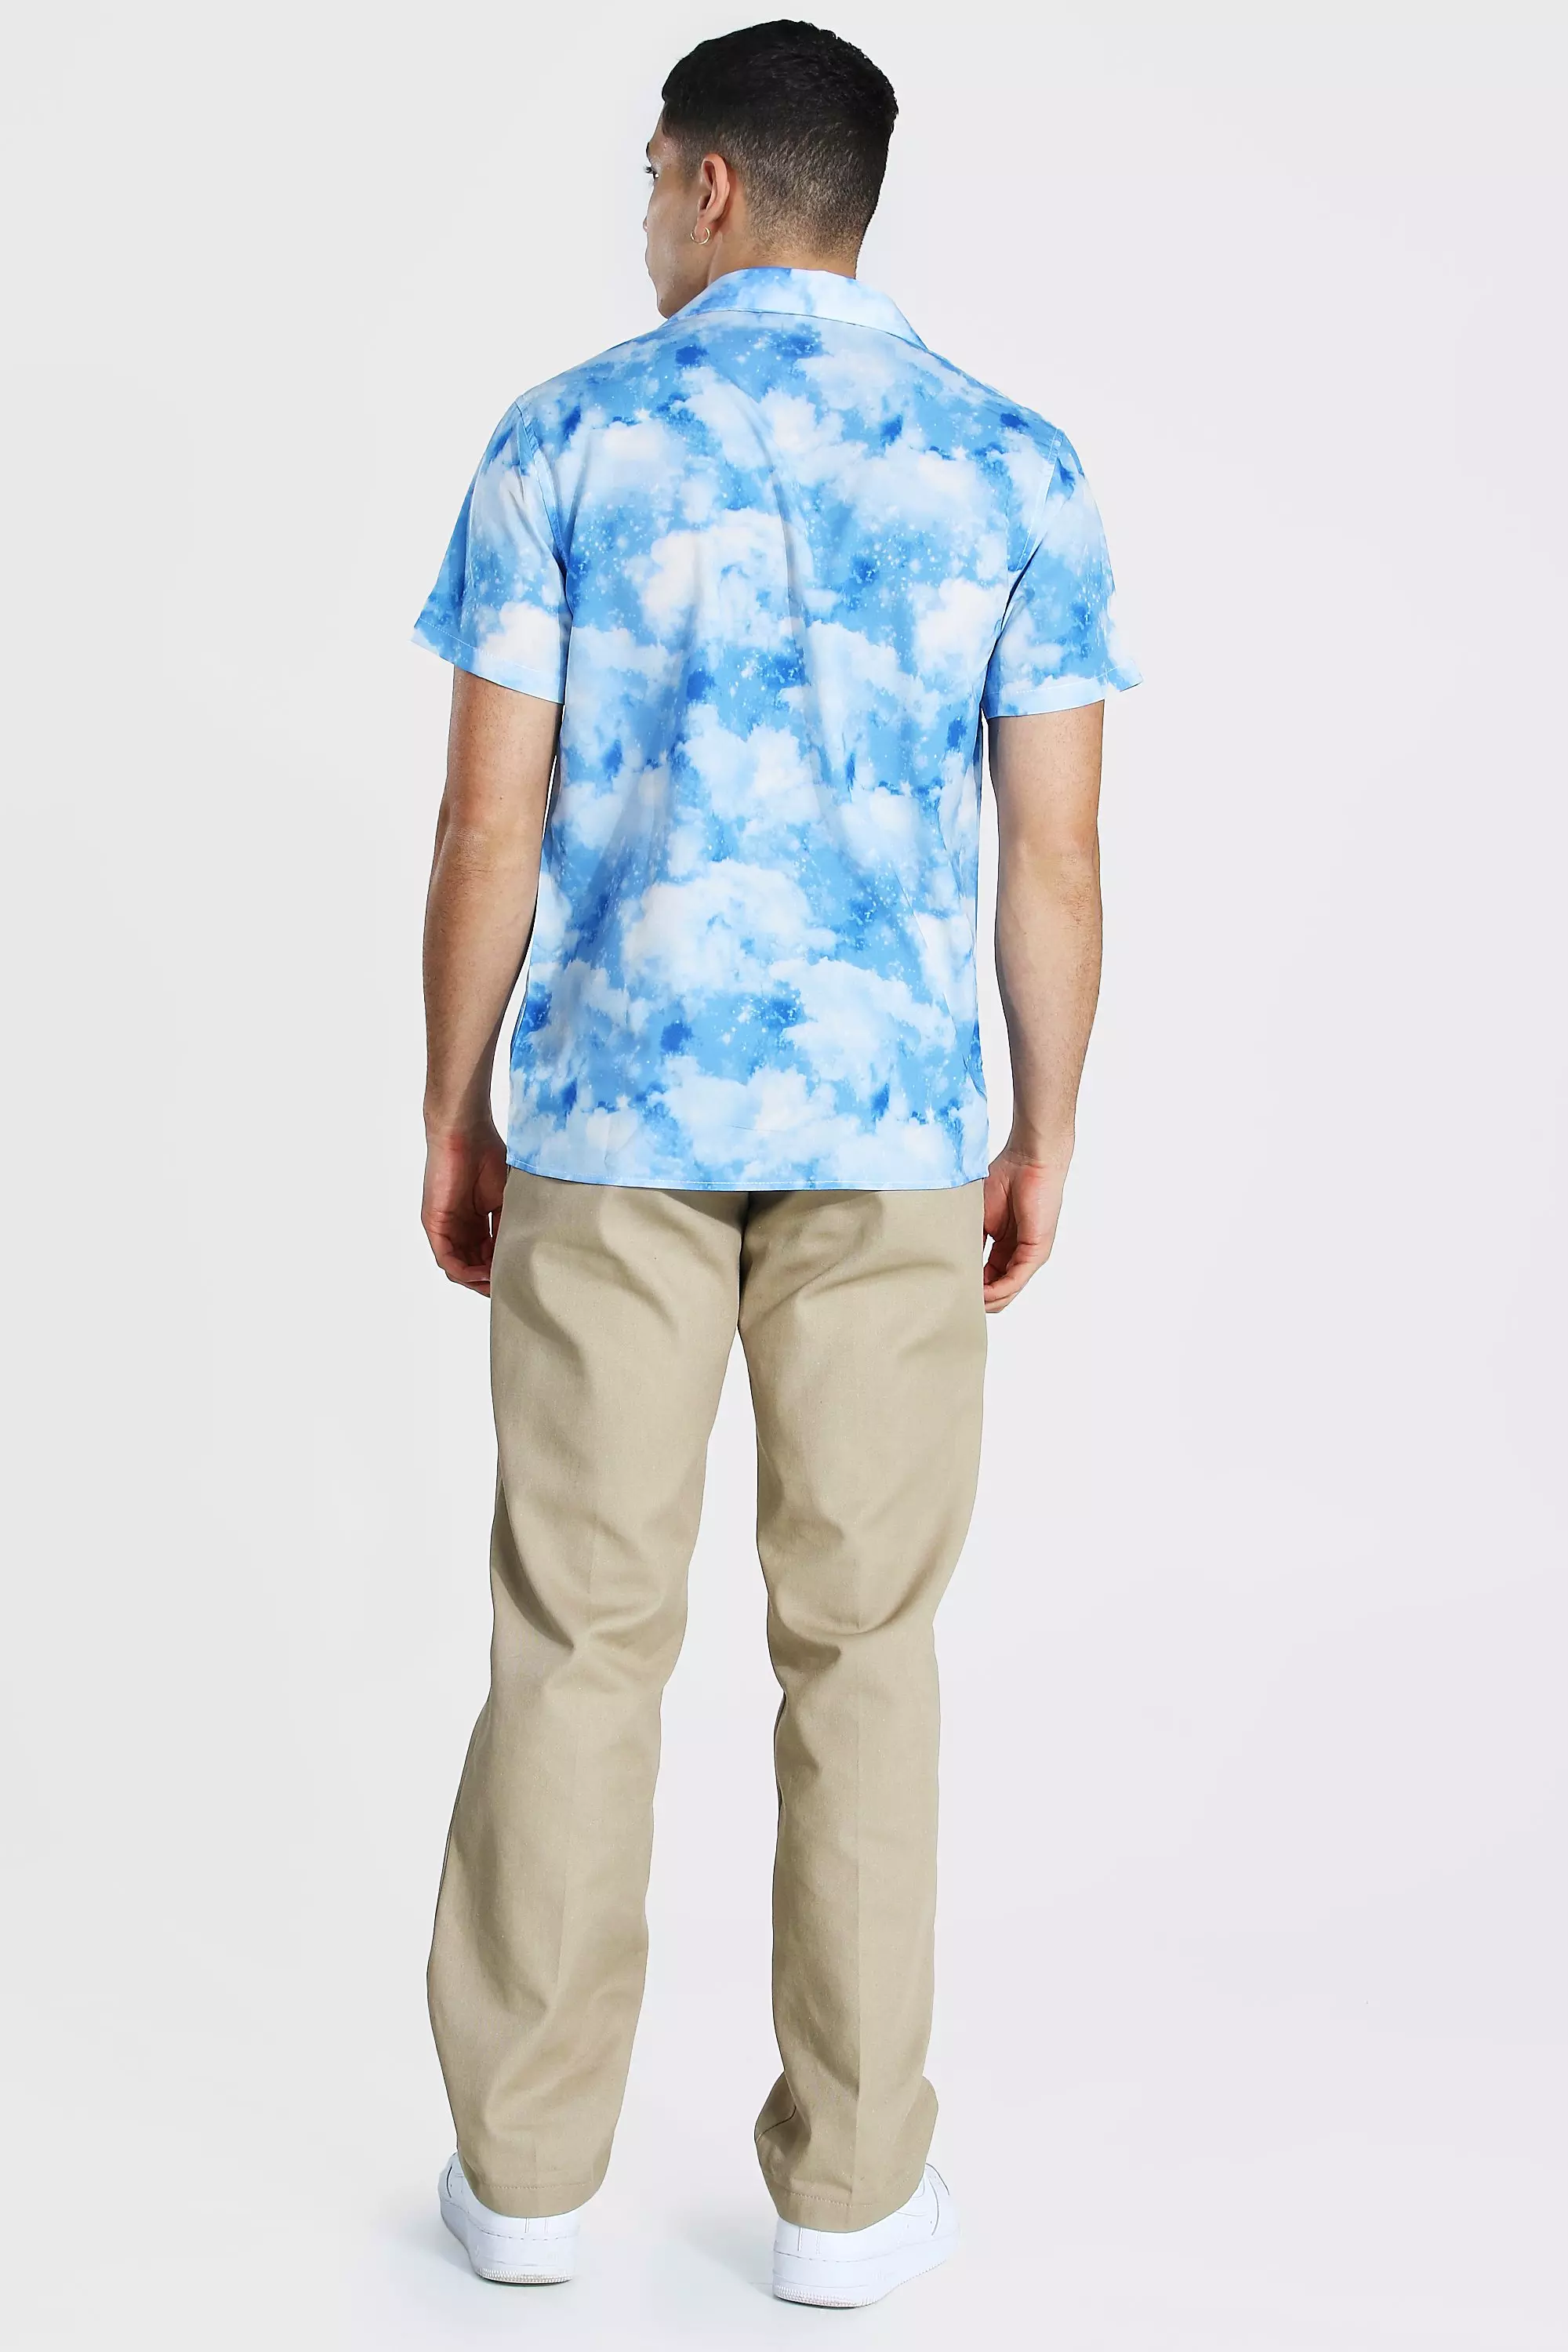 Regular Fit Cloud Shirt  Long sleeve shirts, Clouds pattern, Shirts